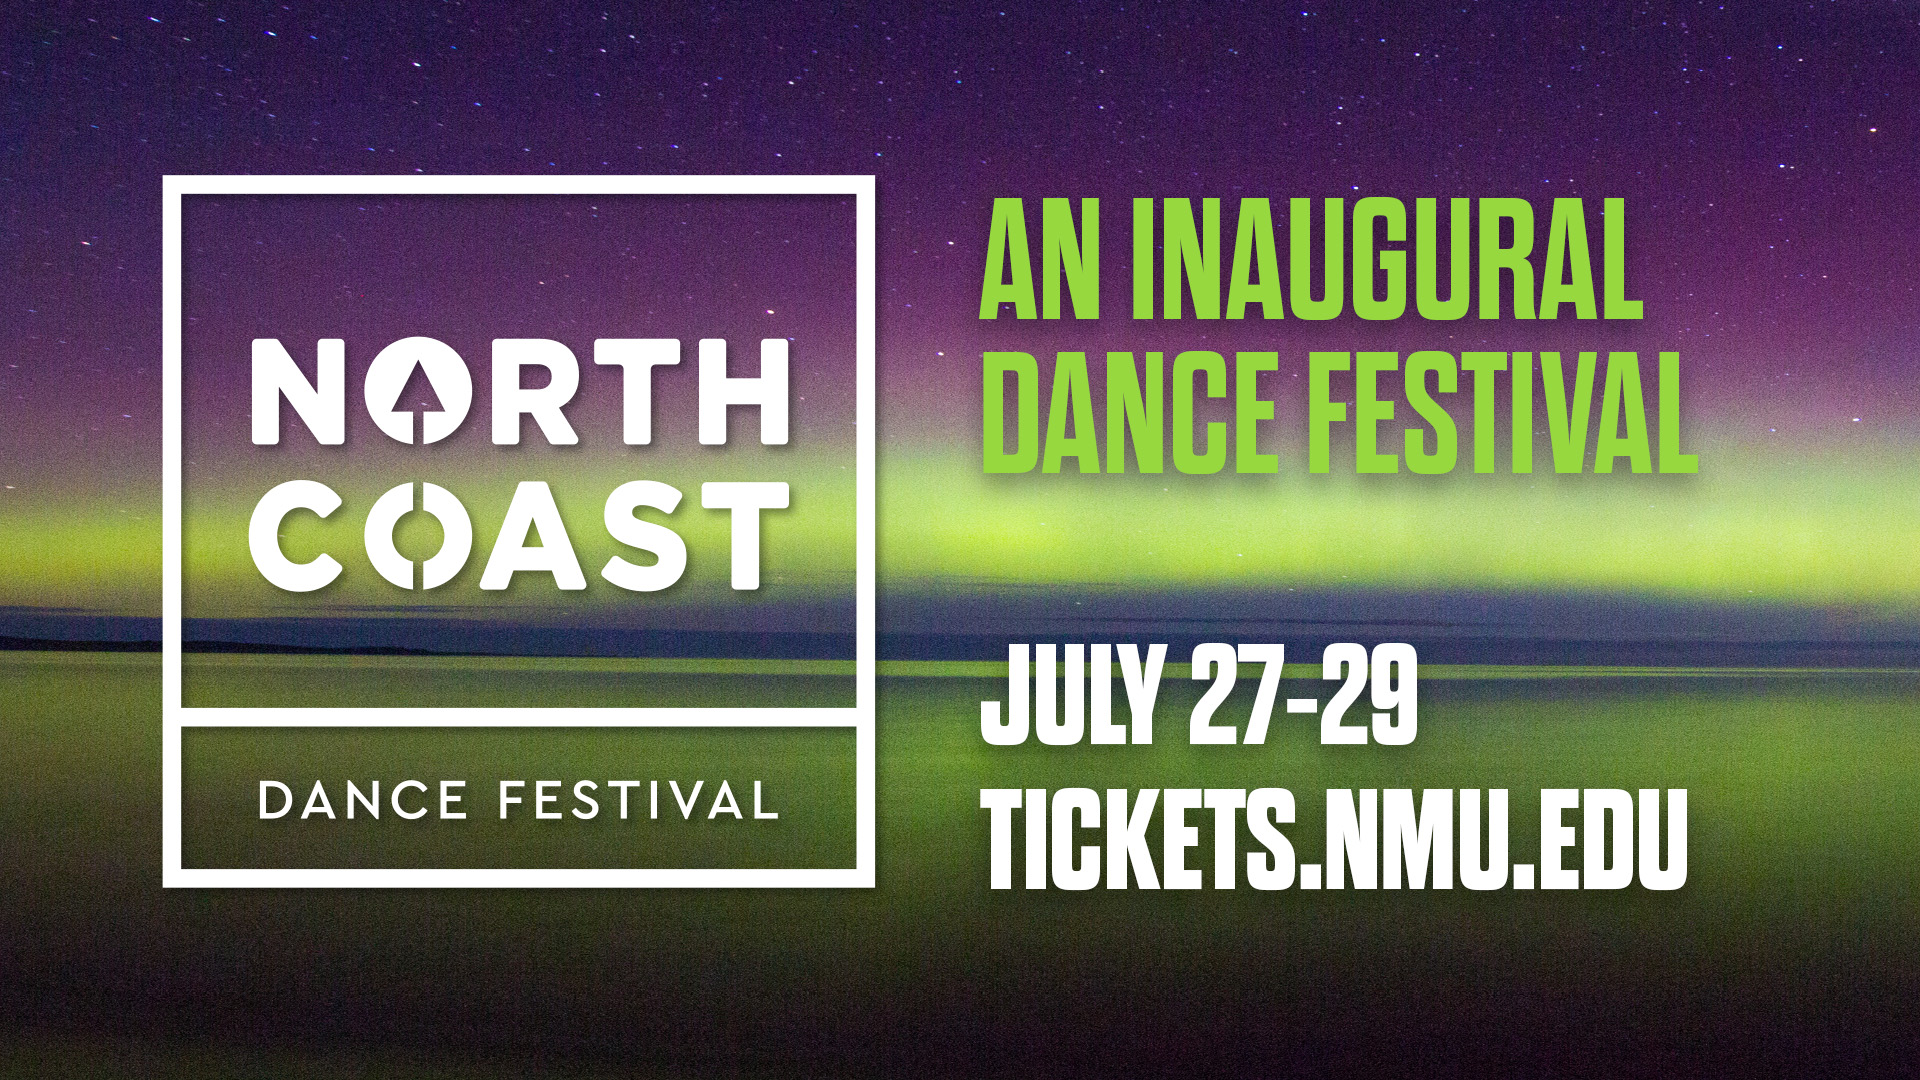 North Coast Dance Festival Event Photo